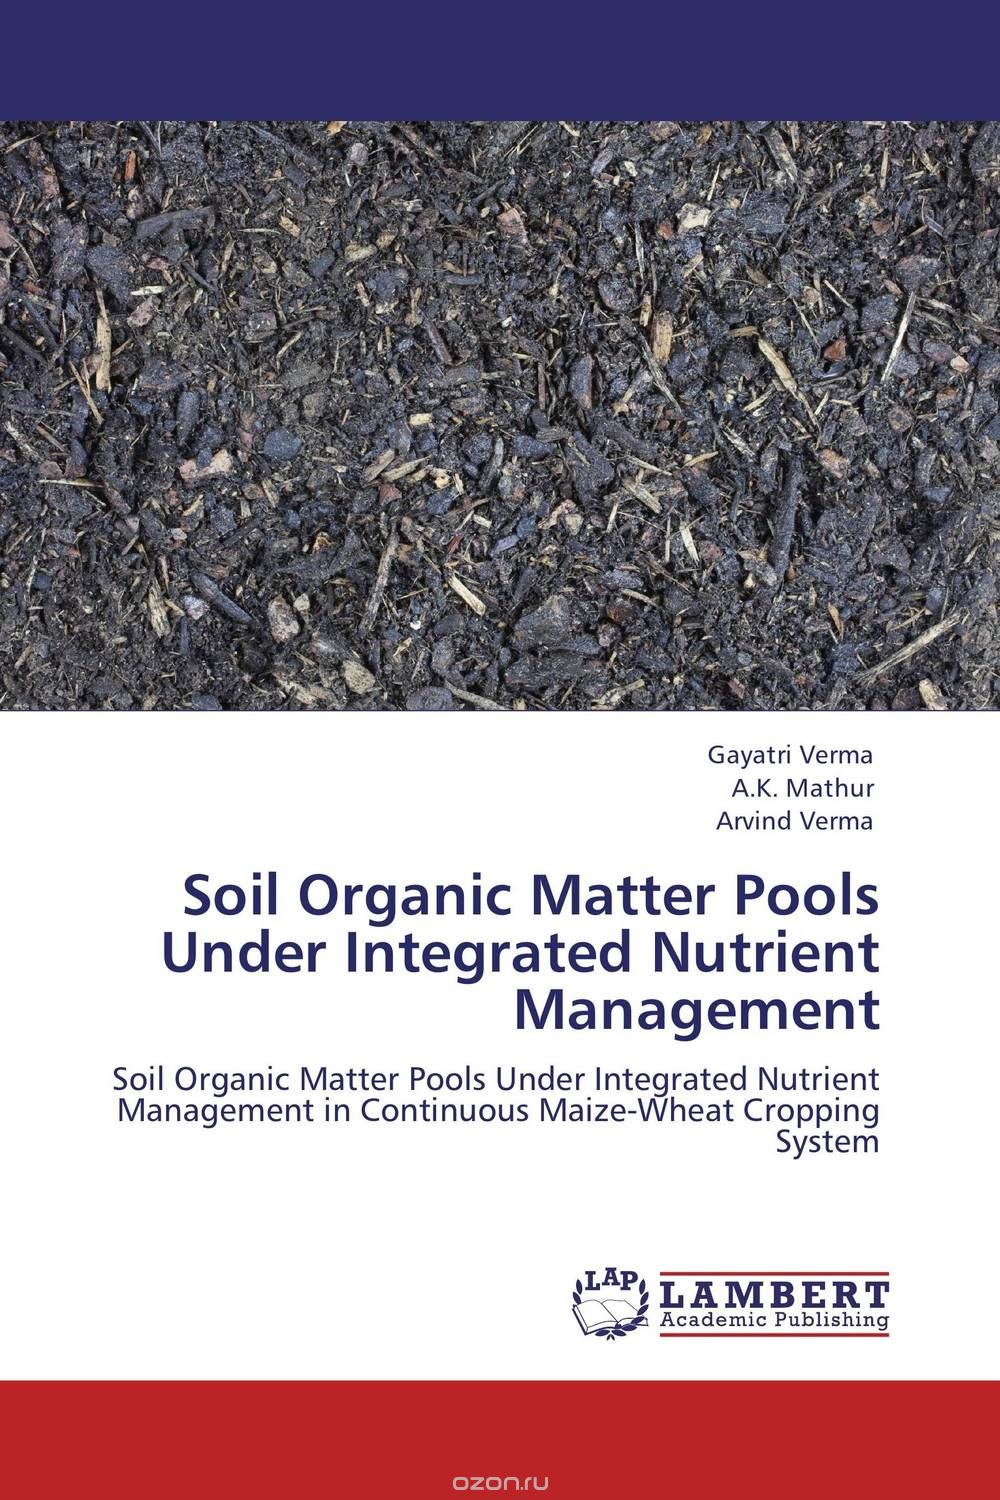 Скачать книгу "Soil Organic Matter Pools Under Integrated Nutrient Management"